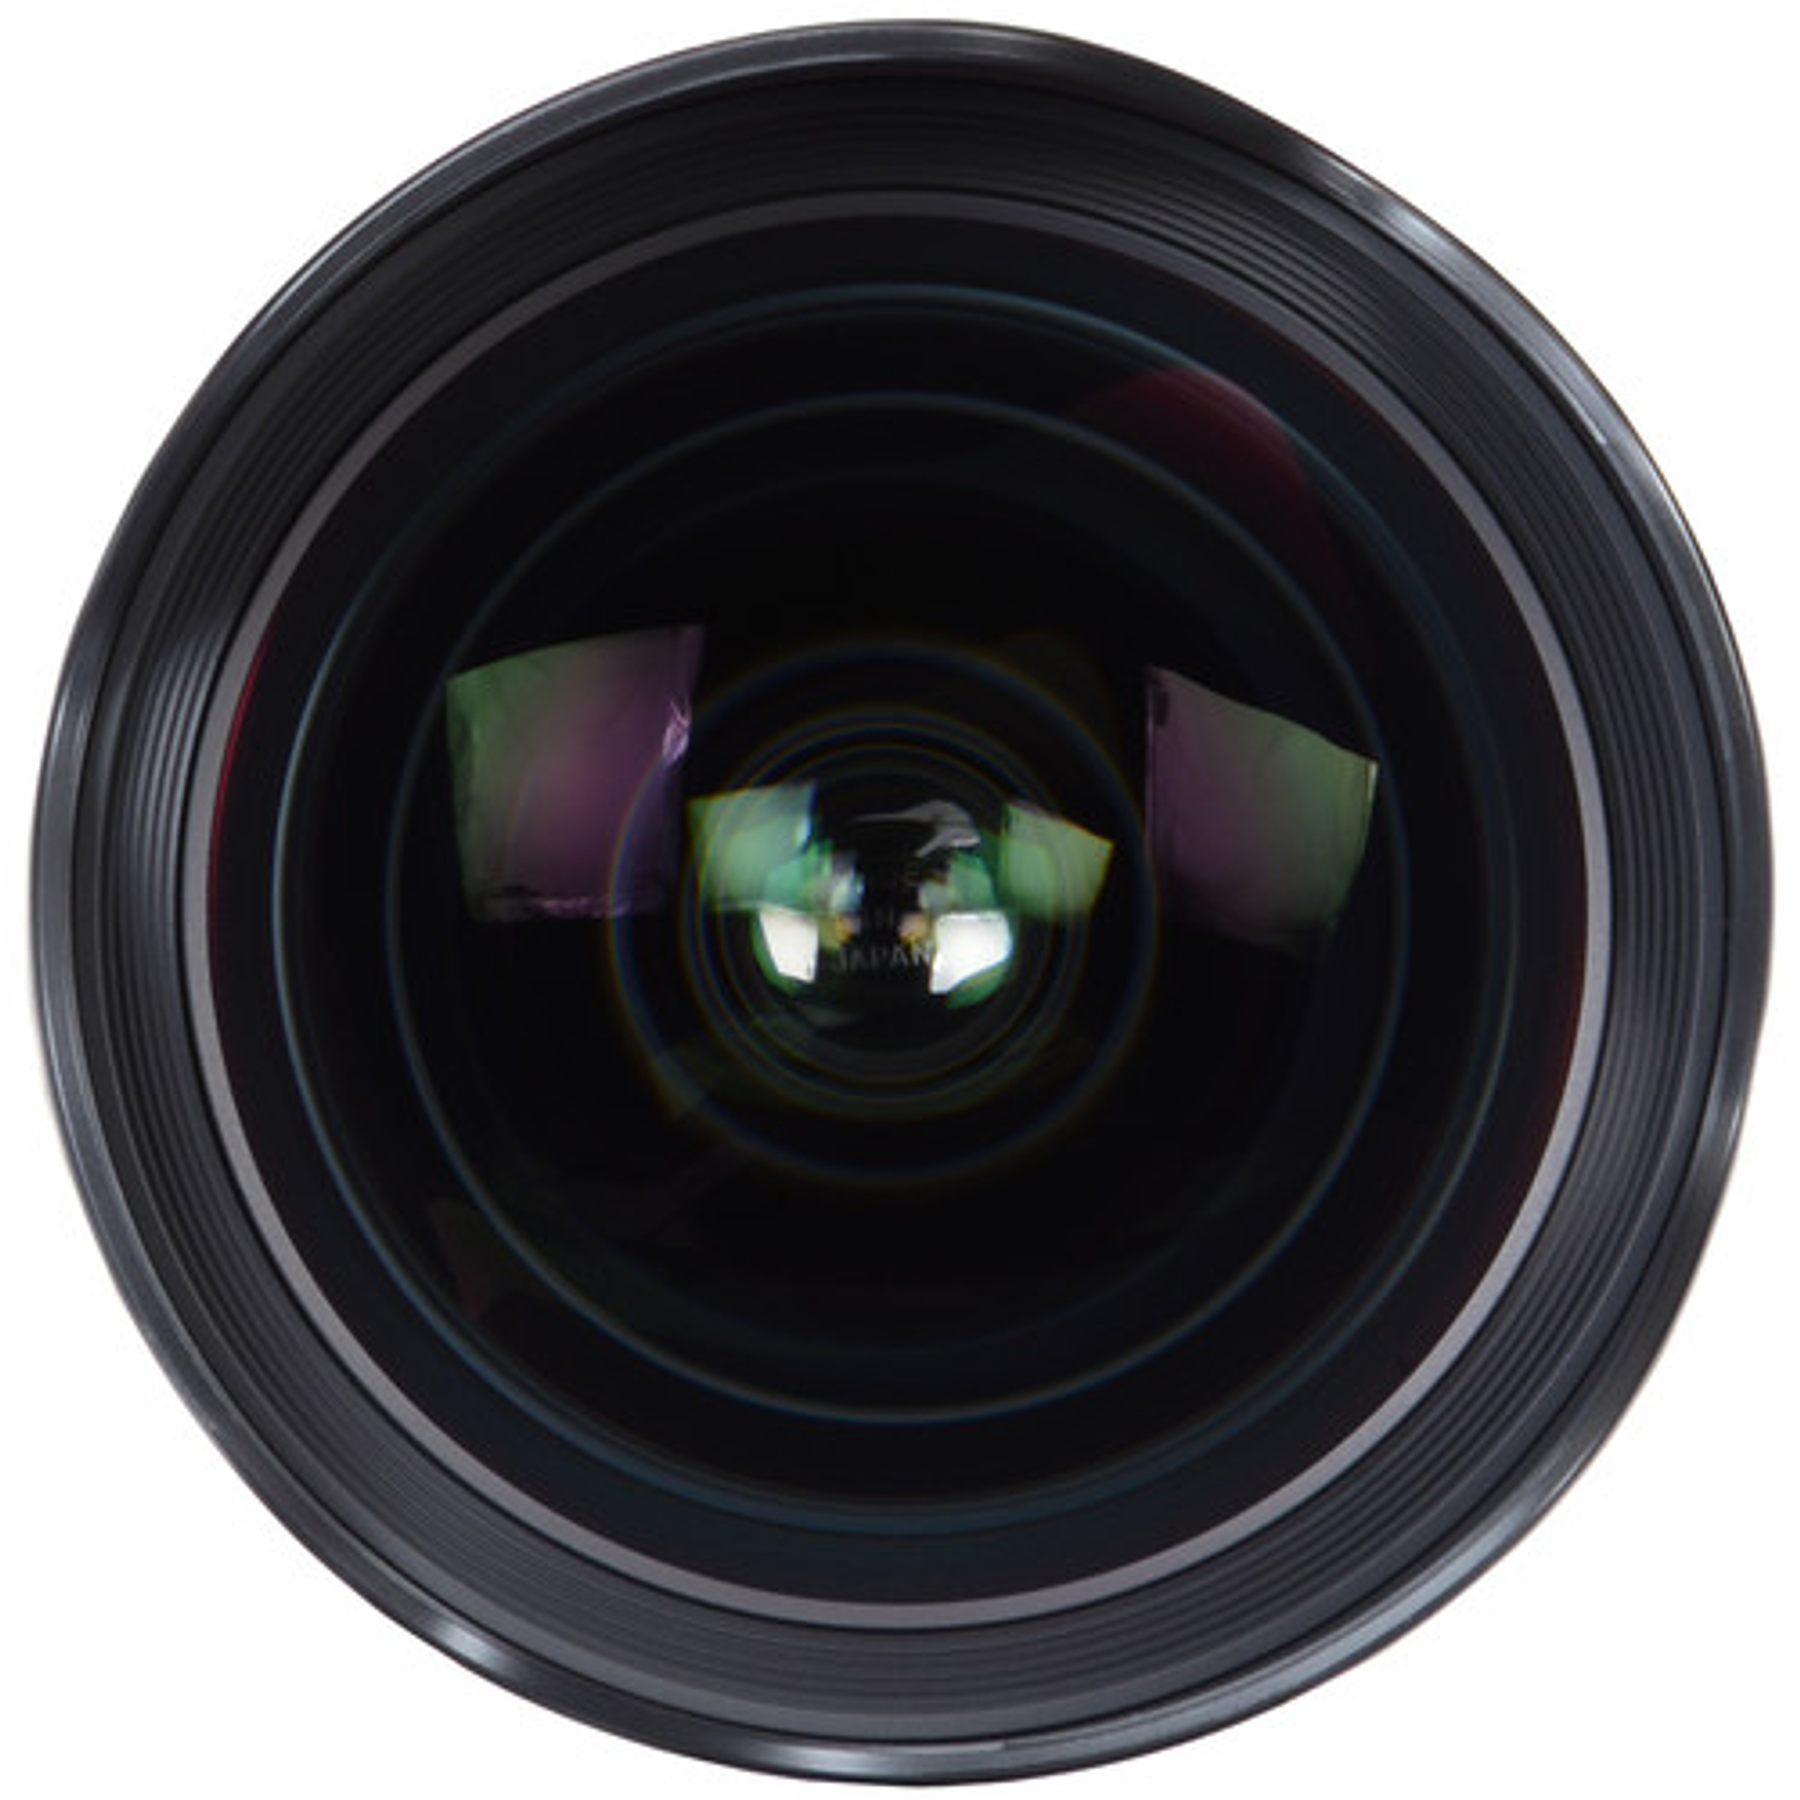 Sigma 20mm f/1.4 DG HSM Art para Canon EF